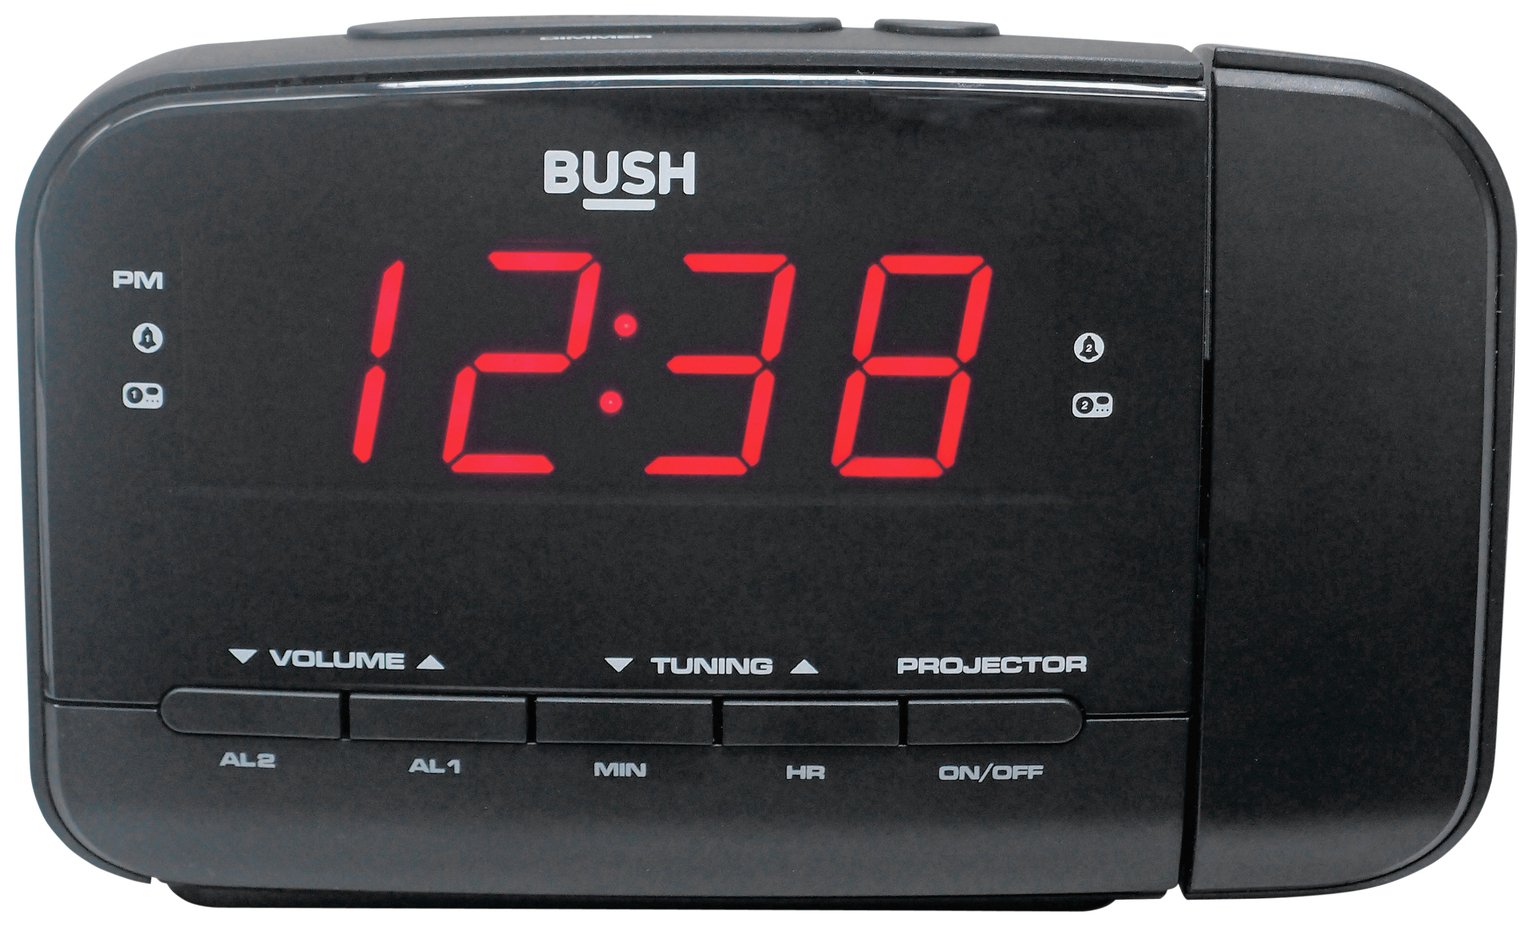 Buy Bush Projection Alarm Clock - Black 